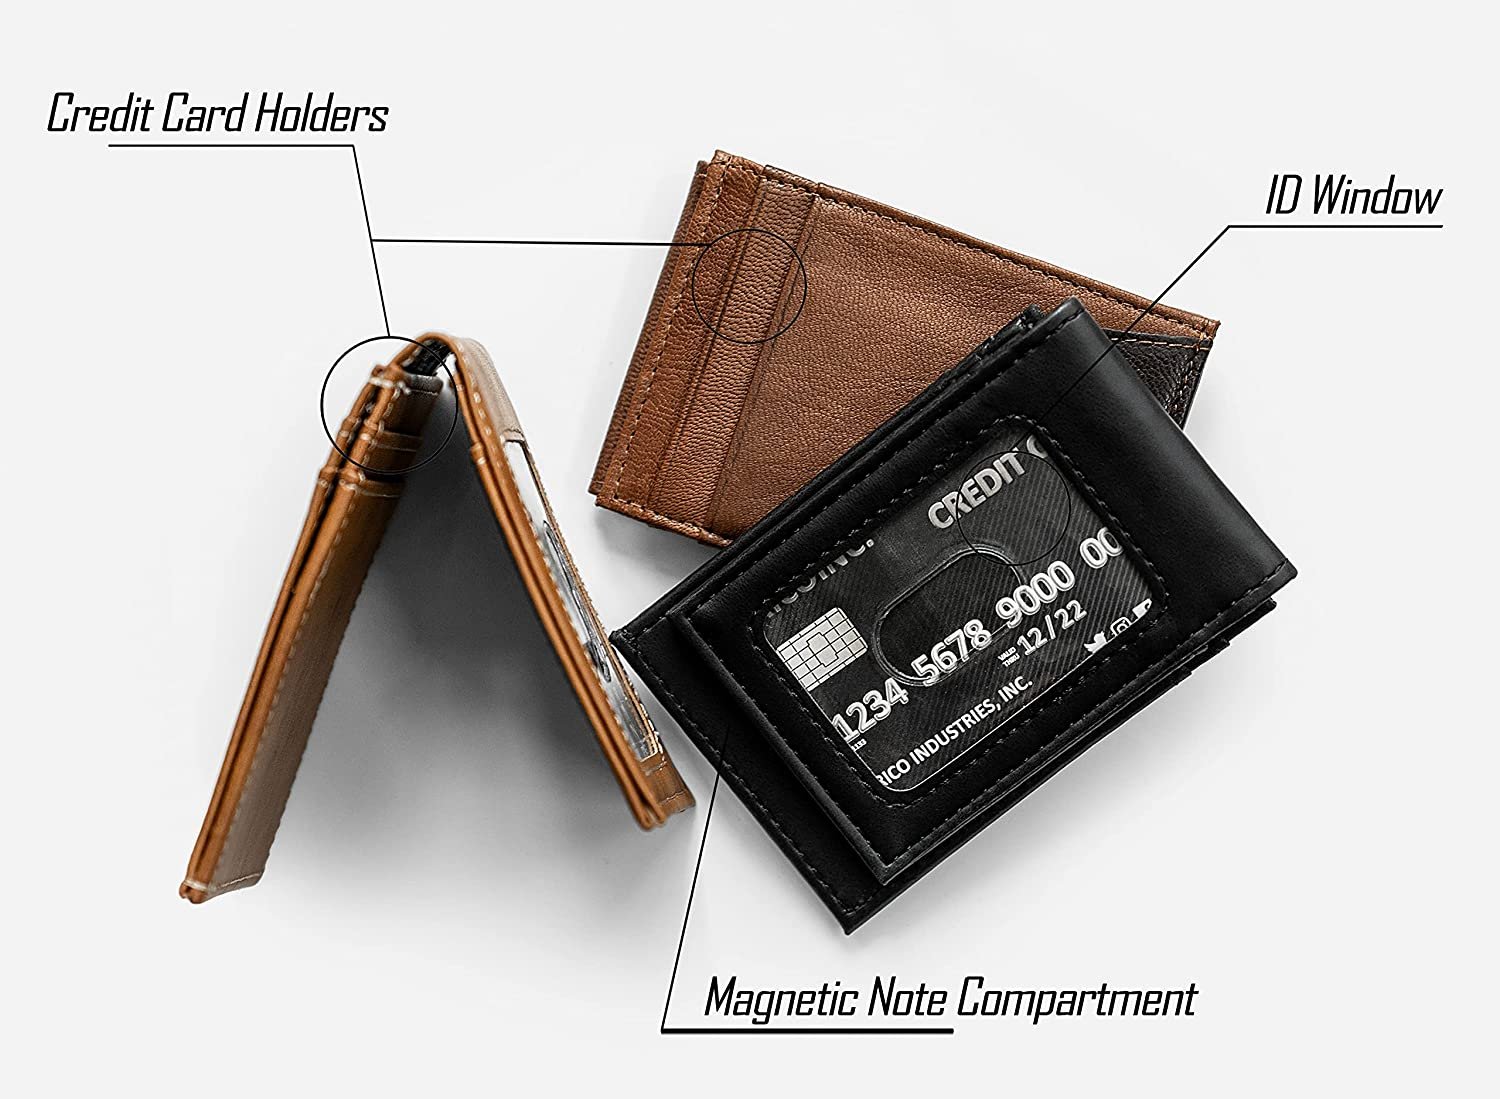 Washington Commanders Premium Black Leather Wallet, Front Pocket Magnetic Money Clip, Laser Engraved, Vegan